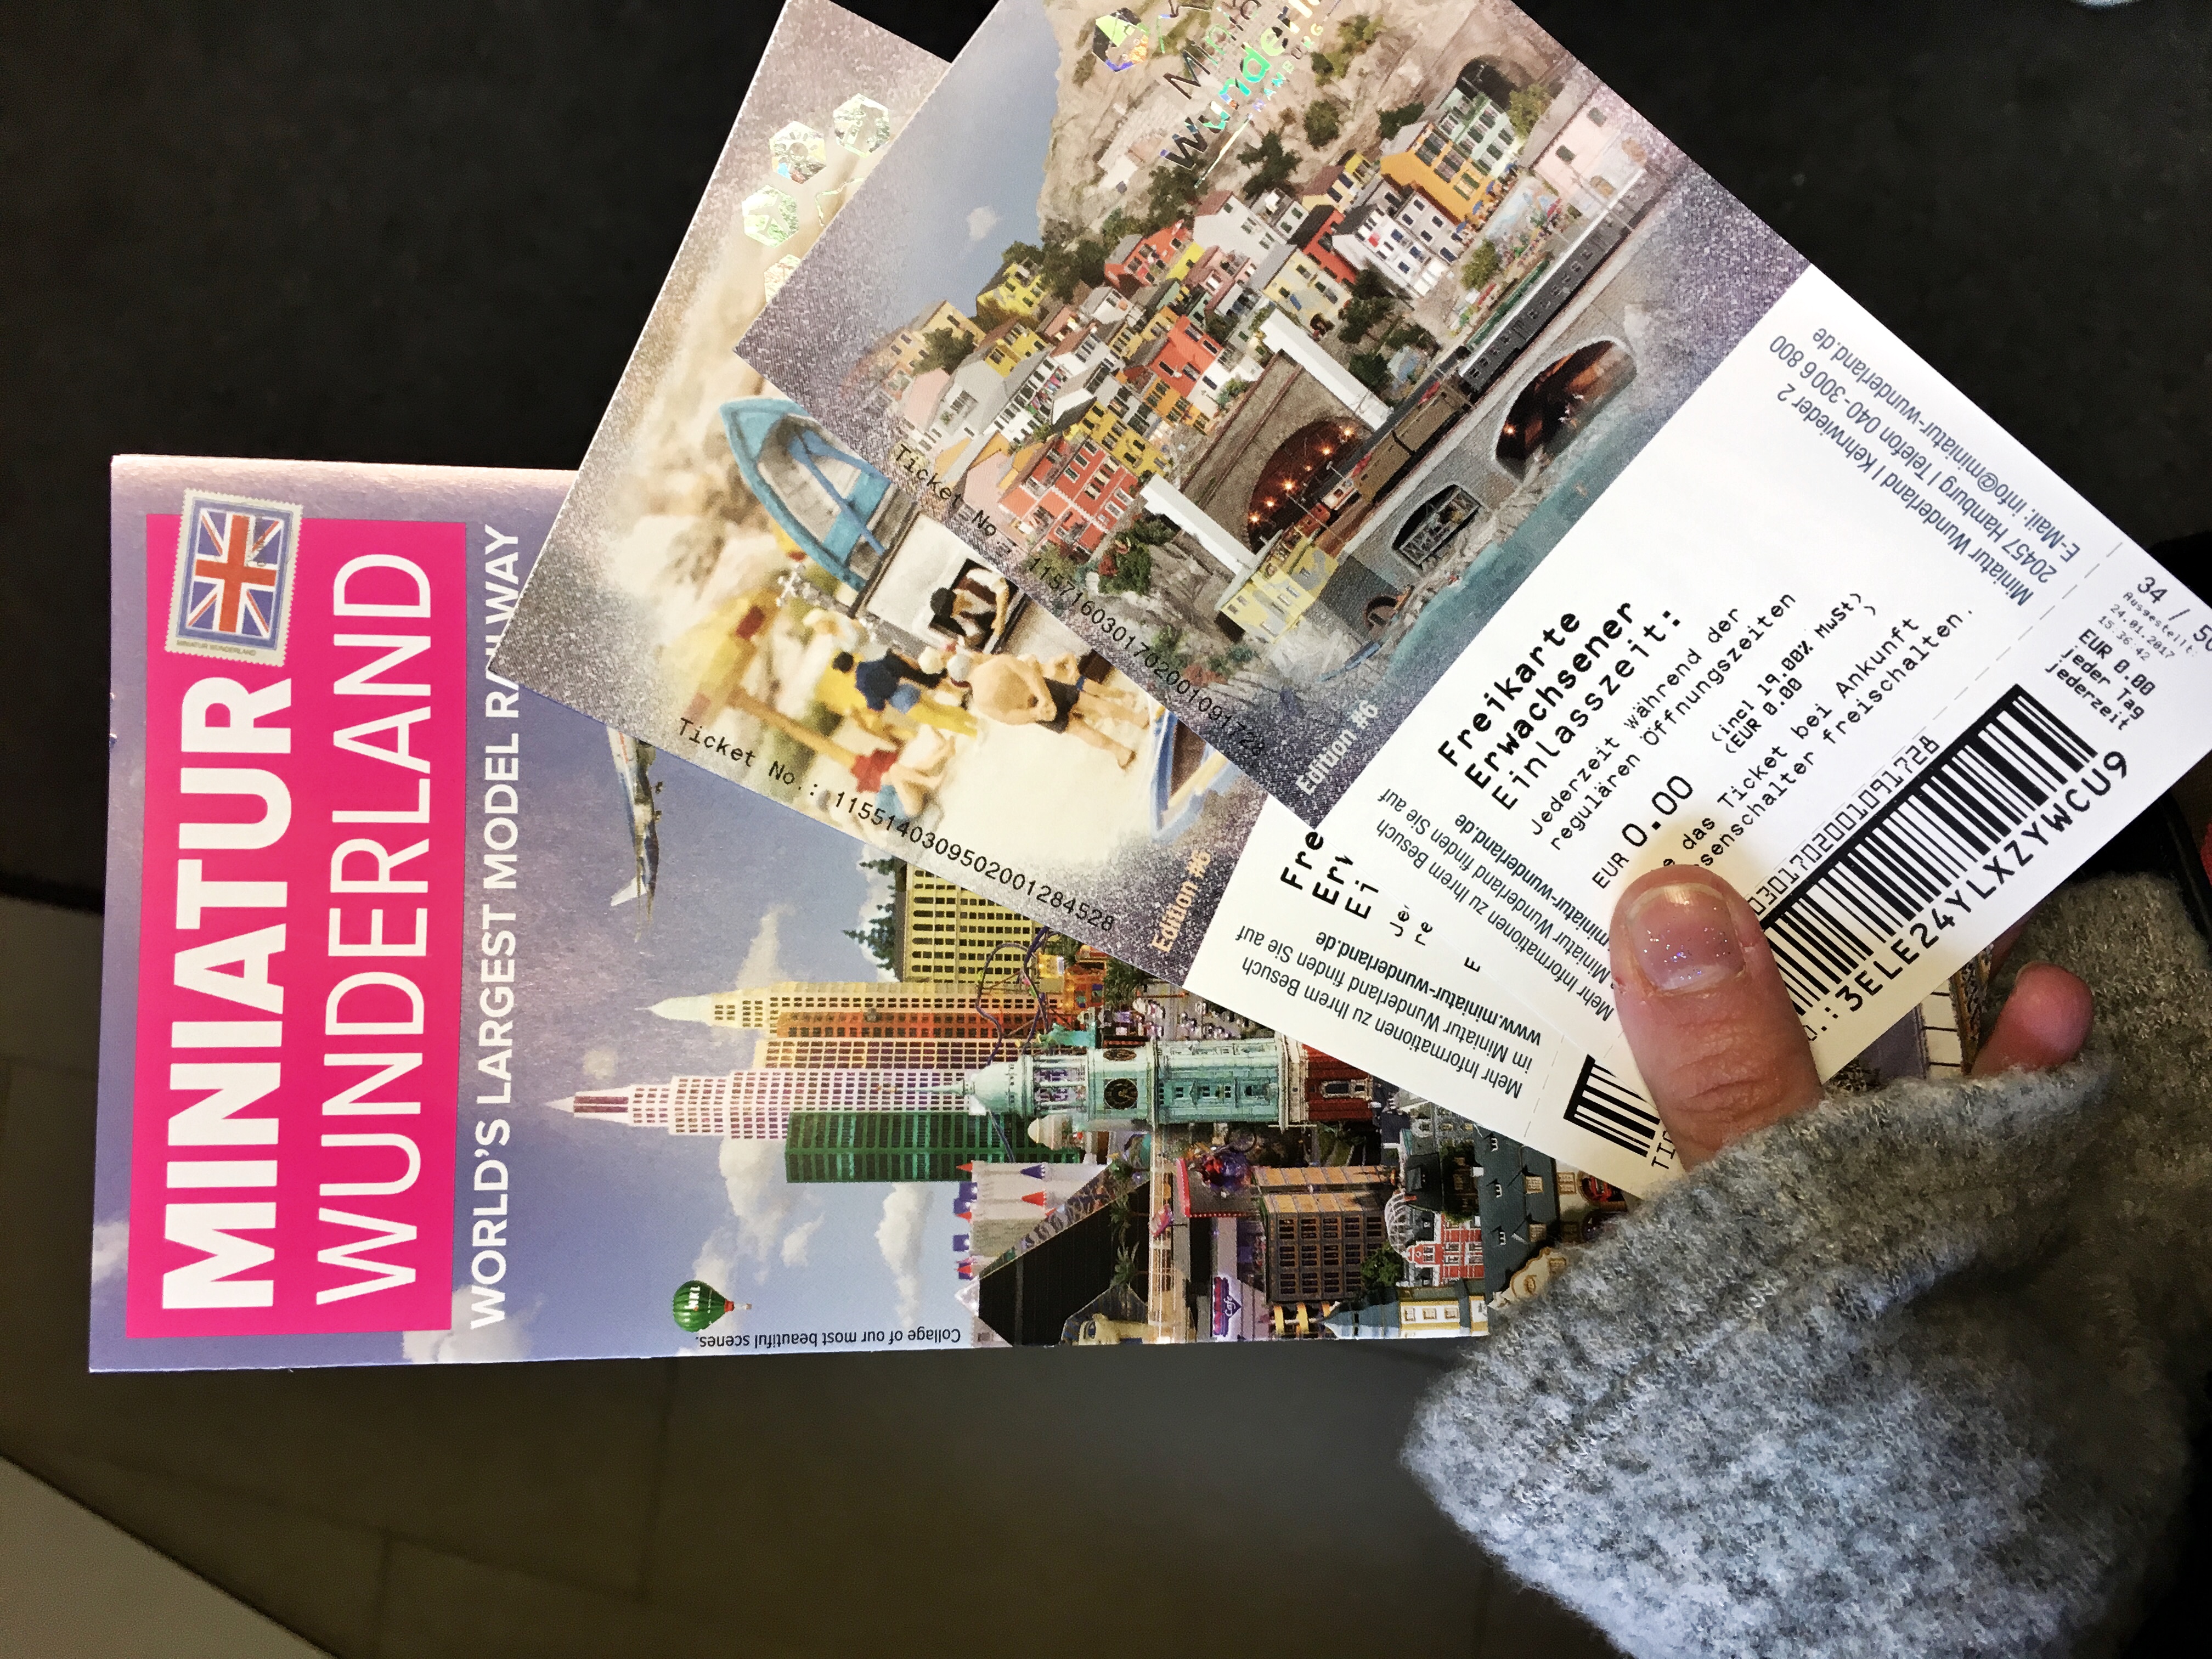 Miniature Wunderland i biglietti